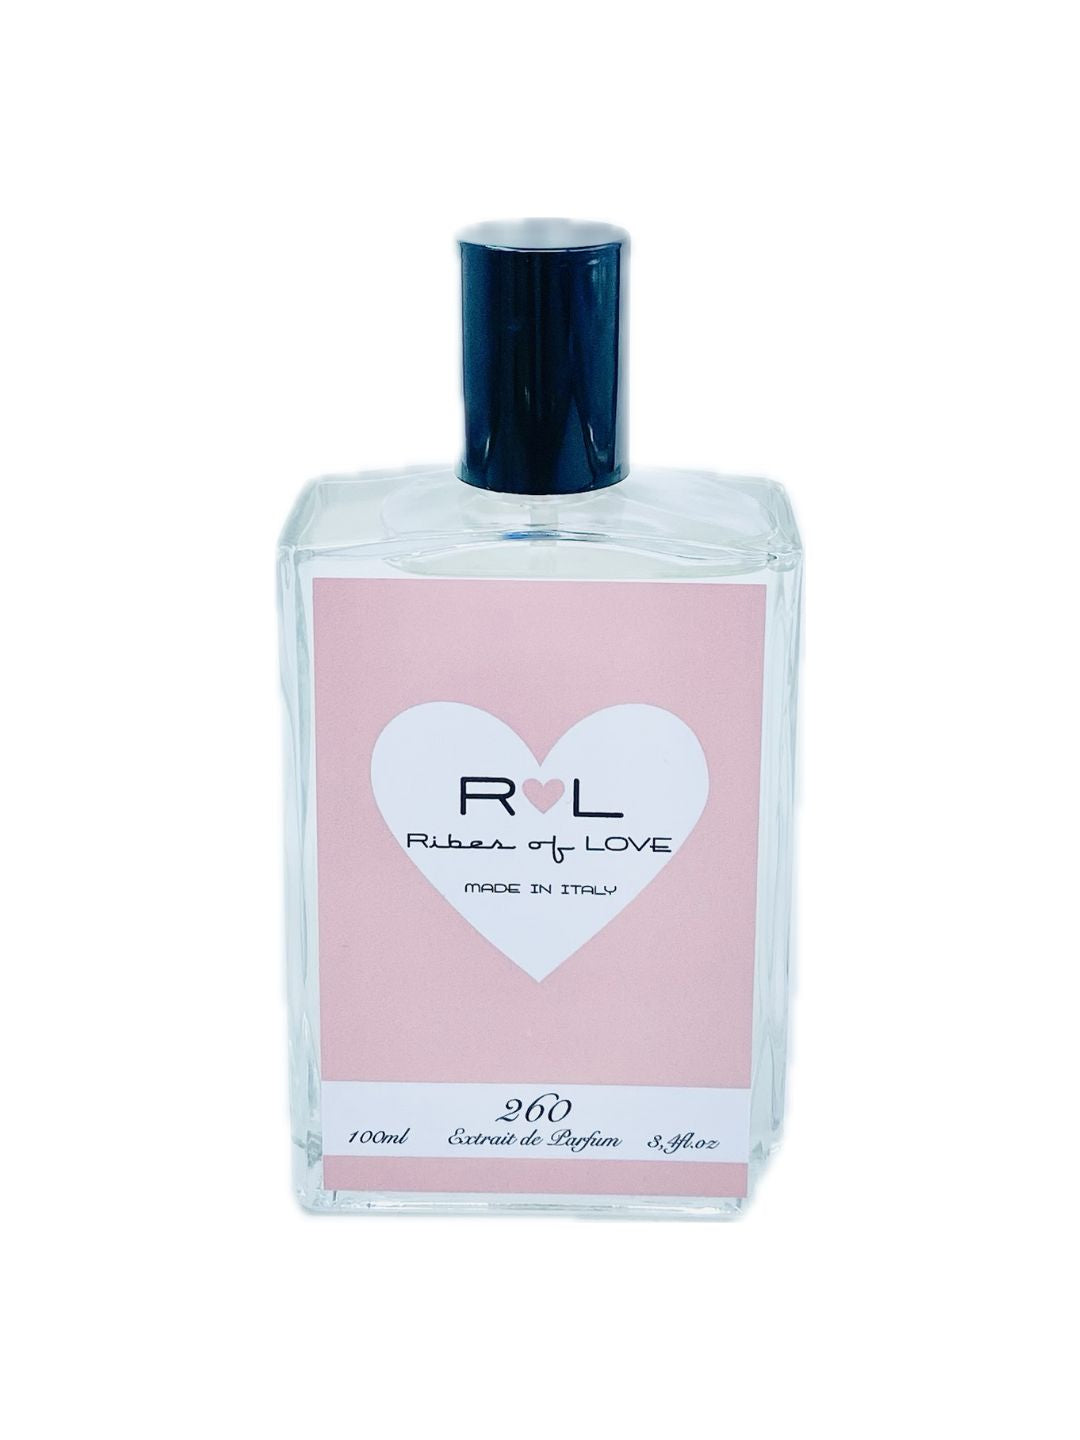 PROFUMO Ribes of LOVE fragranza 260  100ML